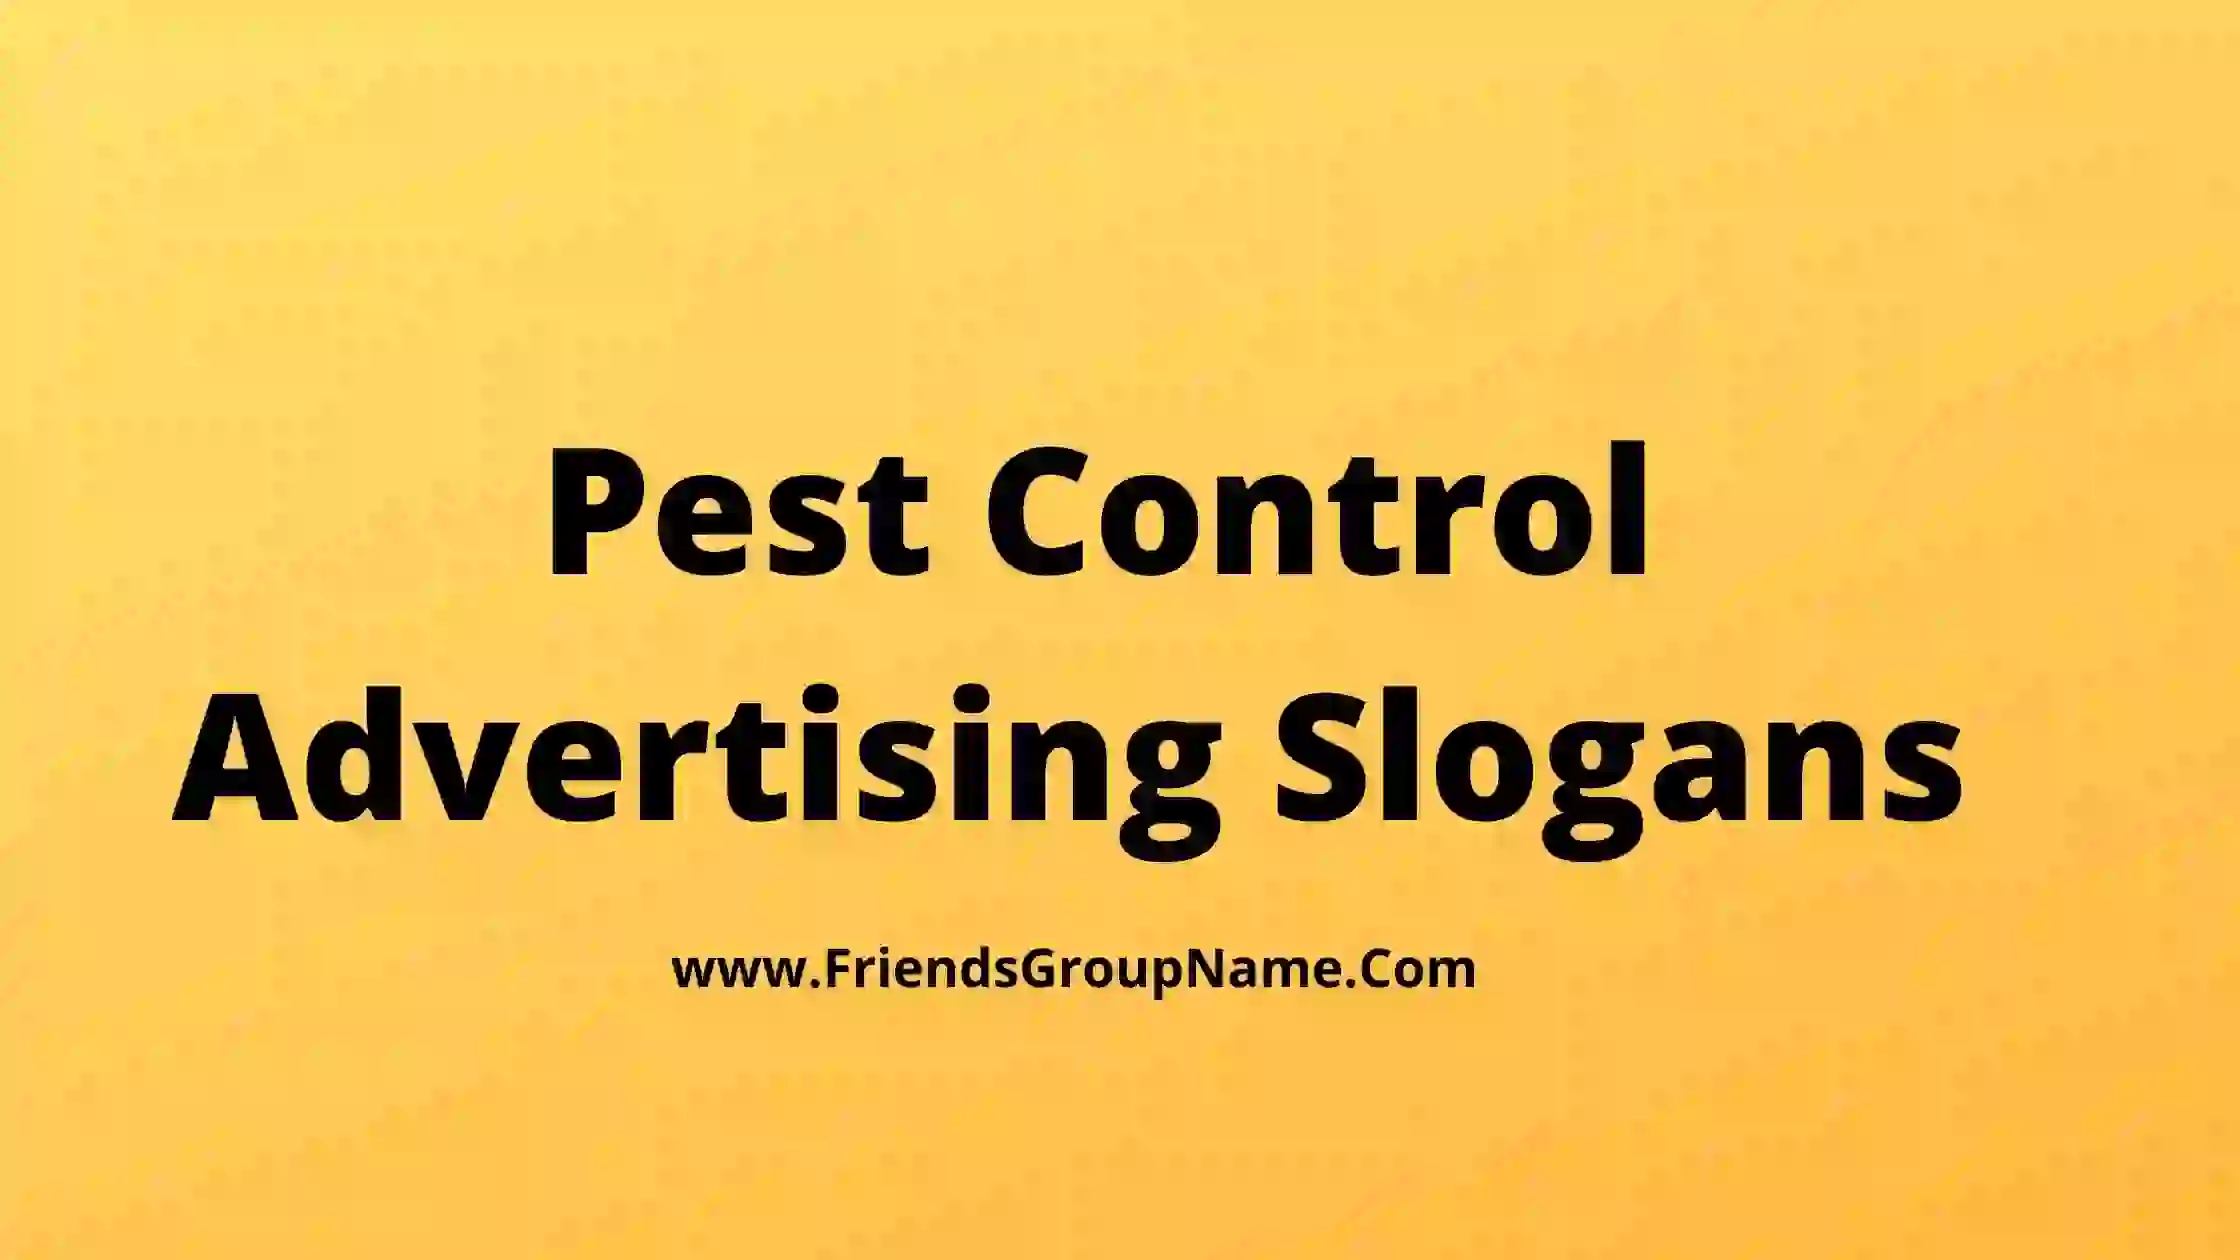 Pest Control Advertising Slogans